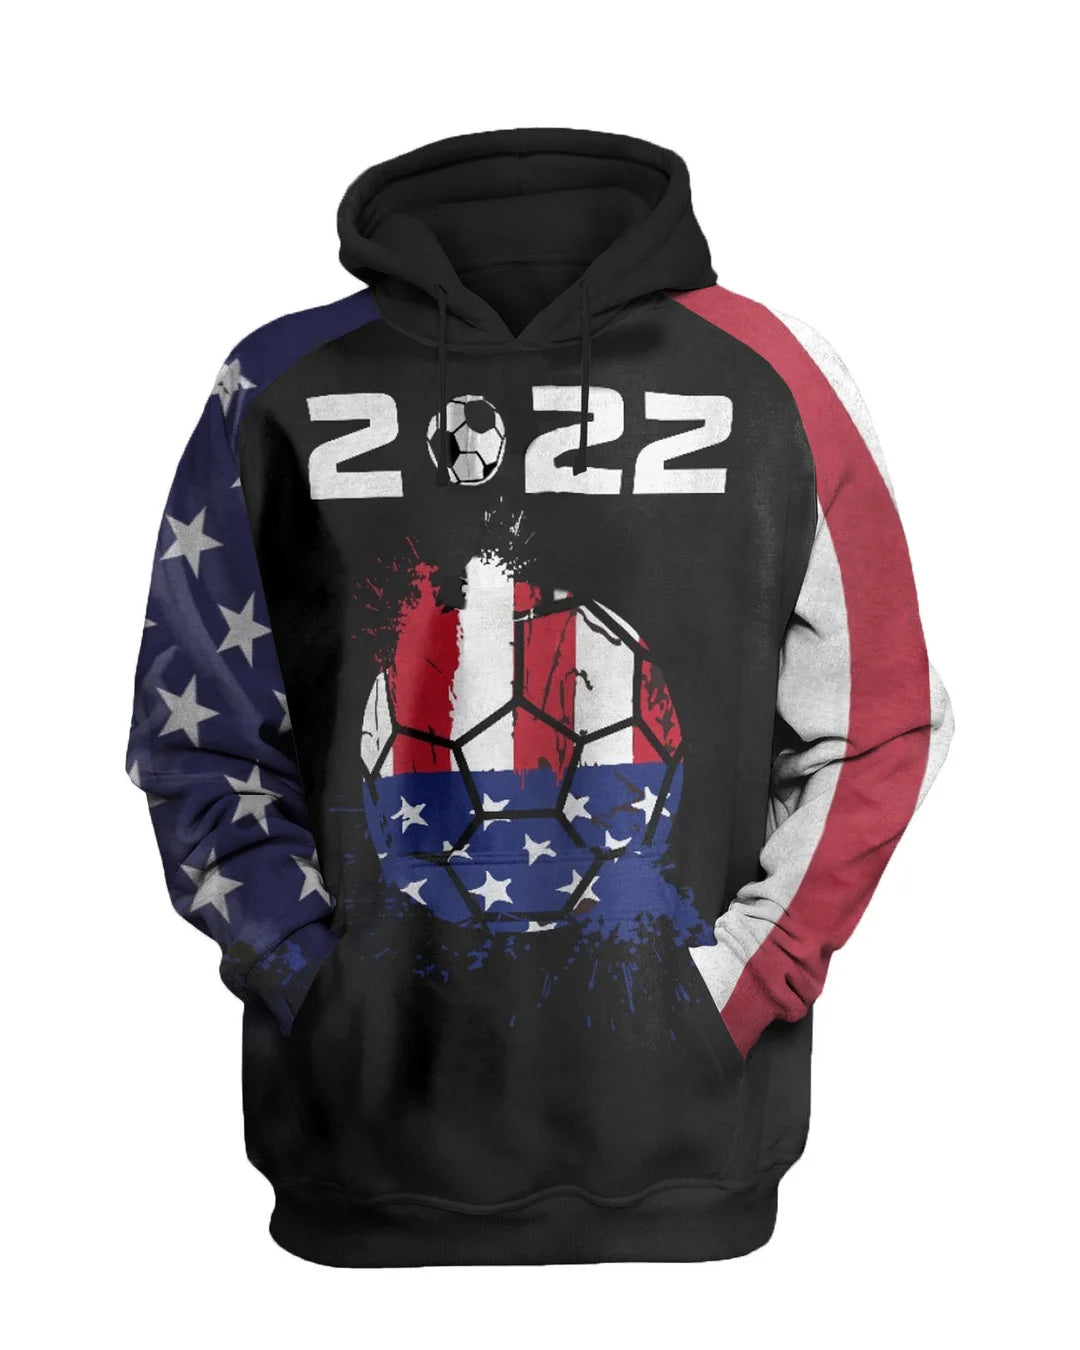 2022 America Printed Sweatshirt Set - DUVAL